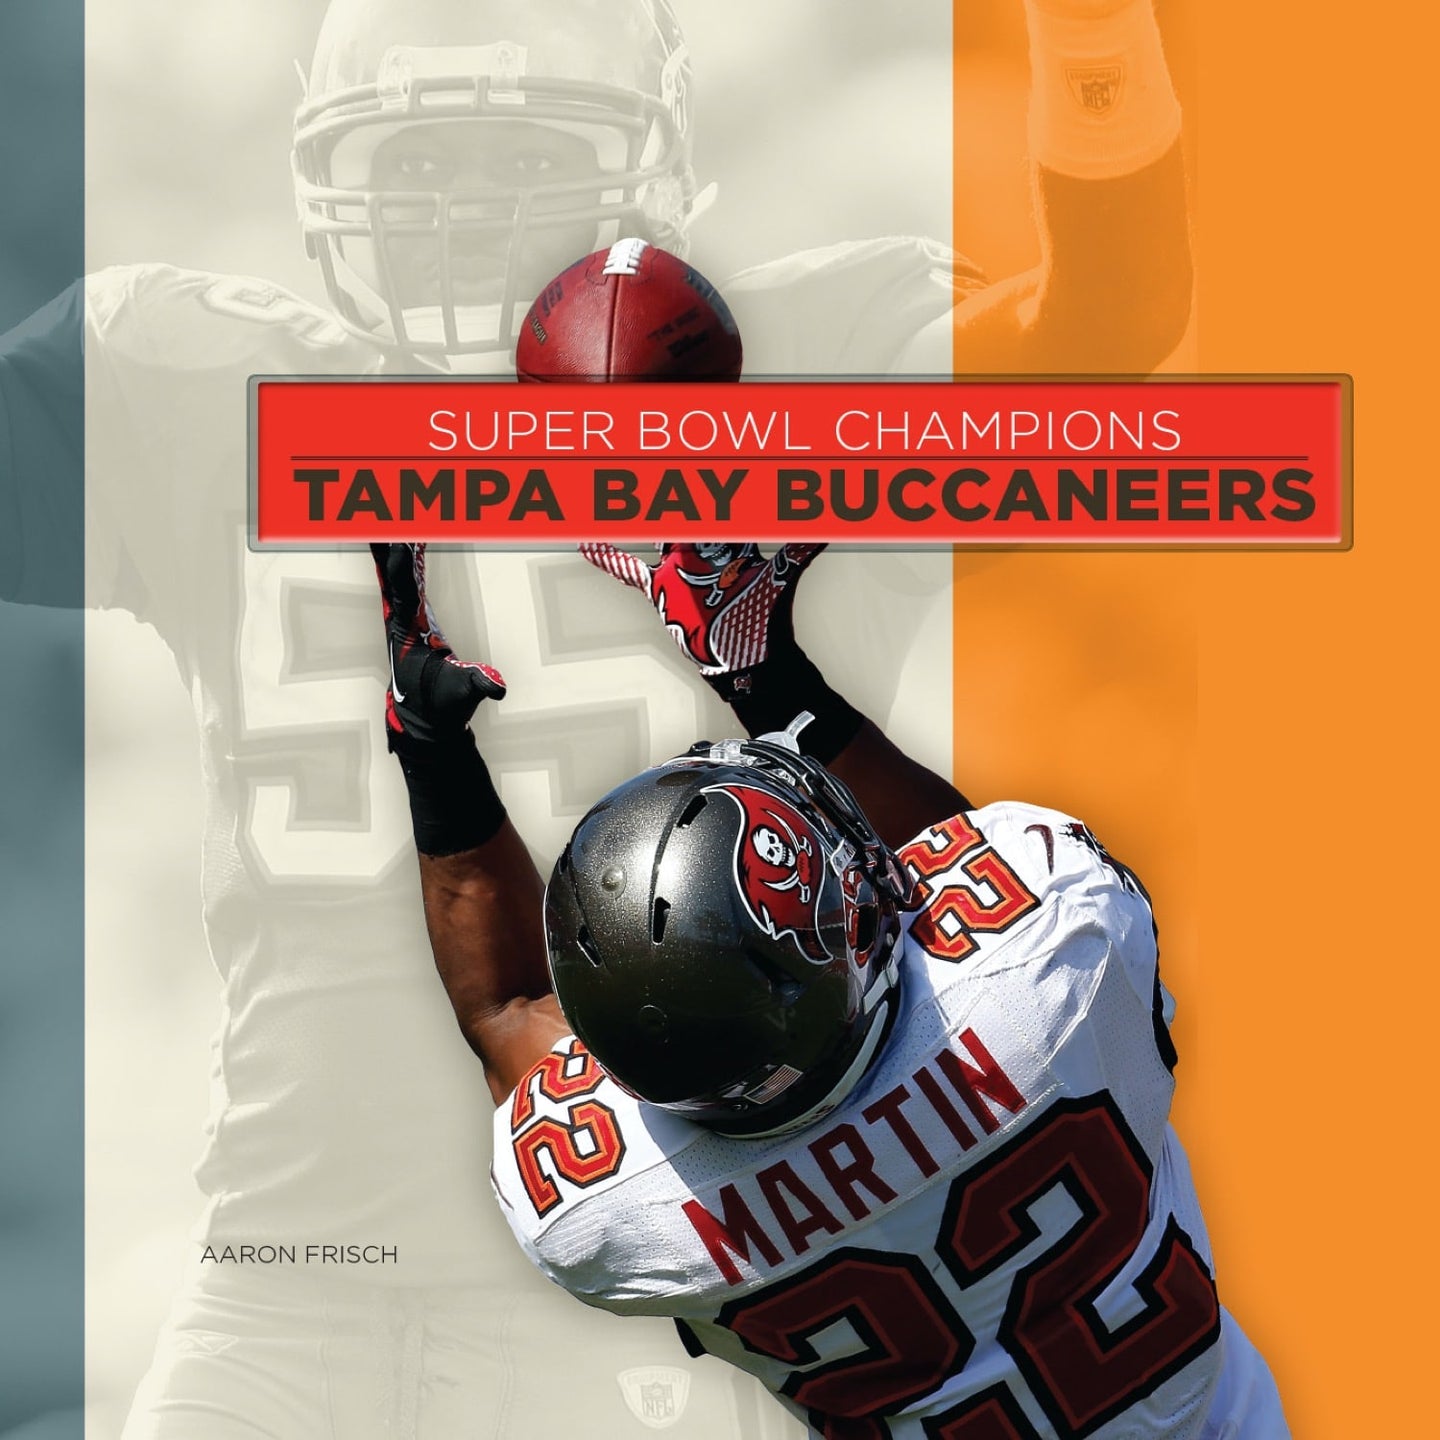 Super Bowl Champions: Tampa Bay Buccaneers (2014)